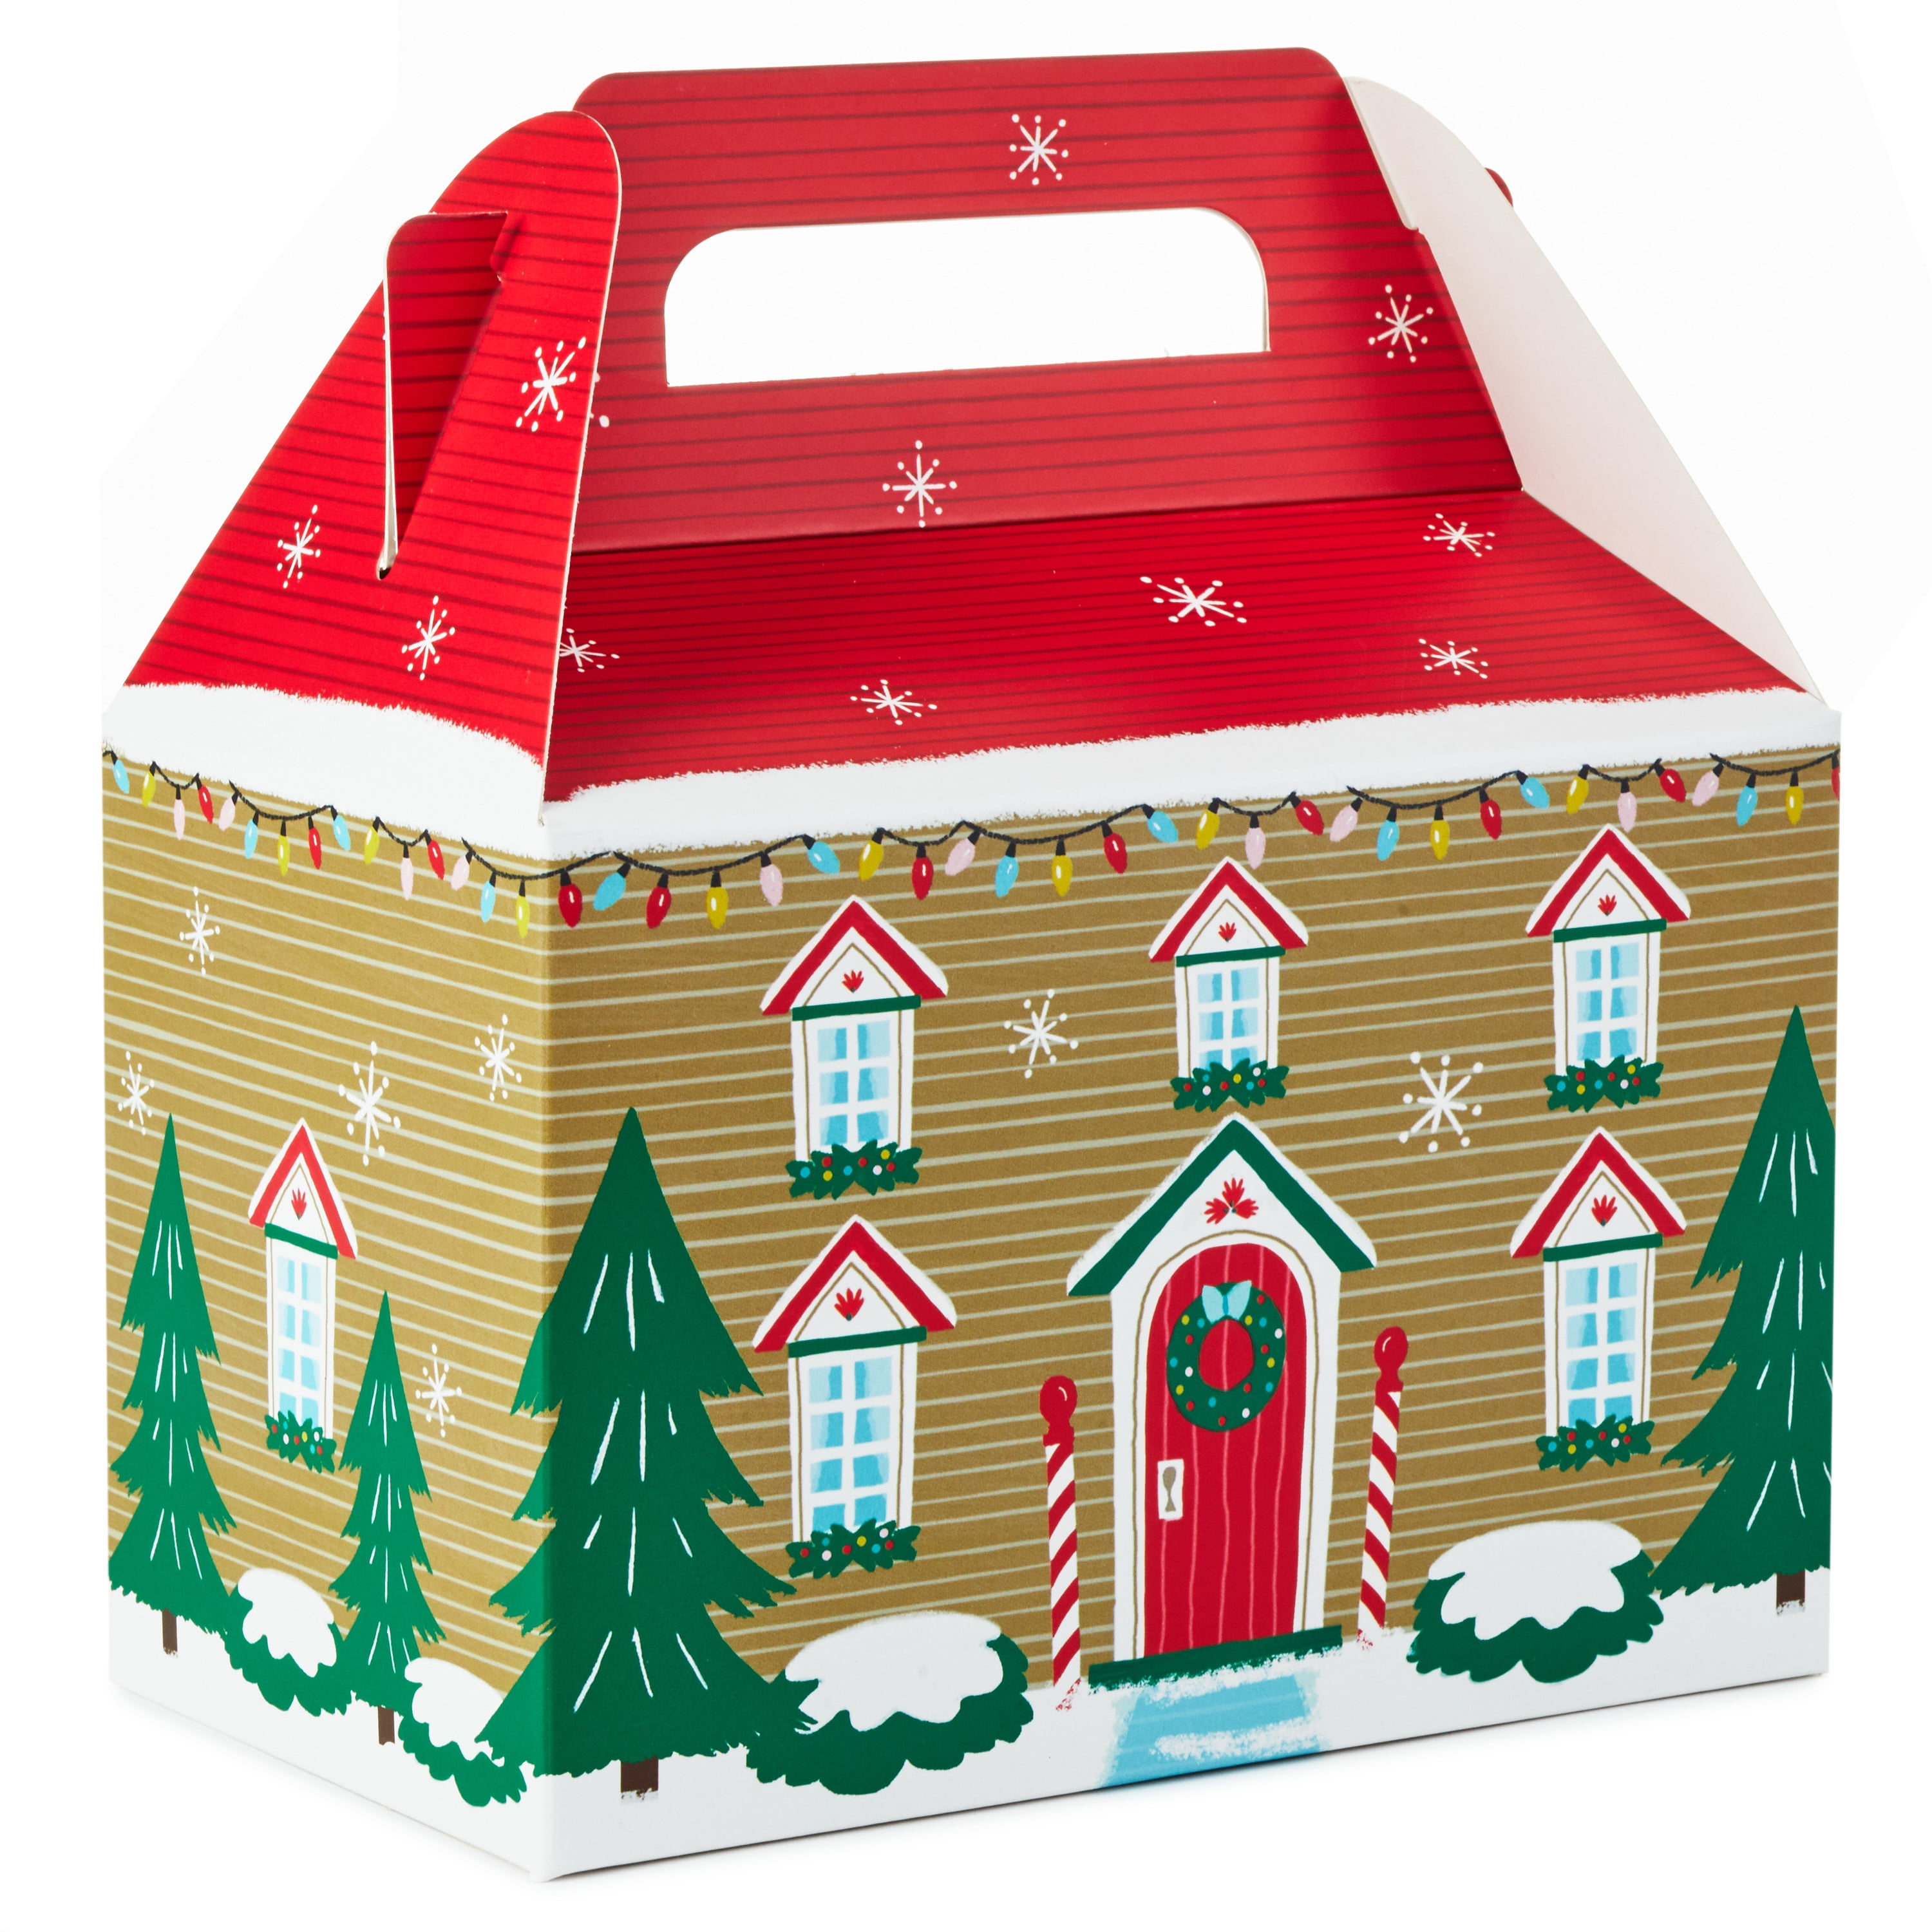 Hallmark Christmas Gift Box (Gingerbread House)